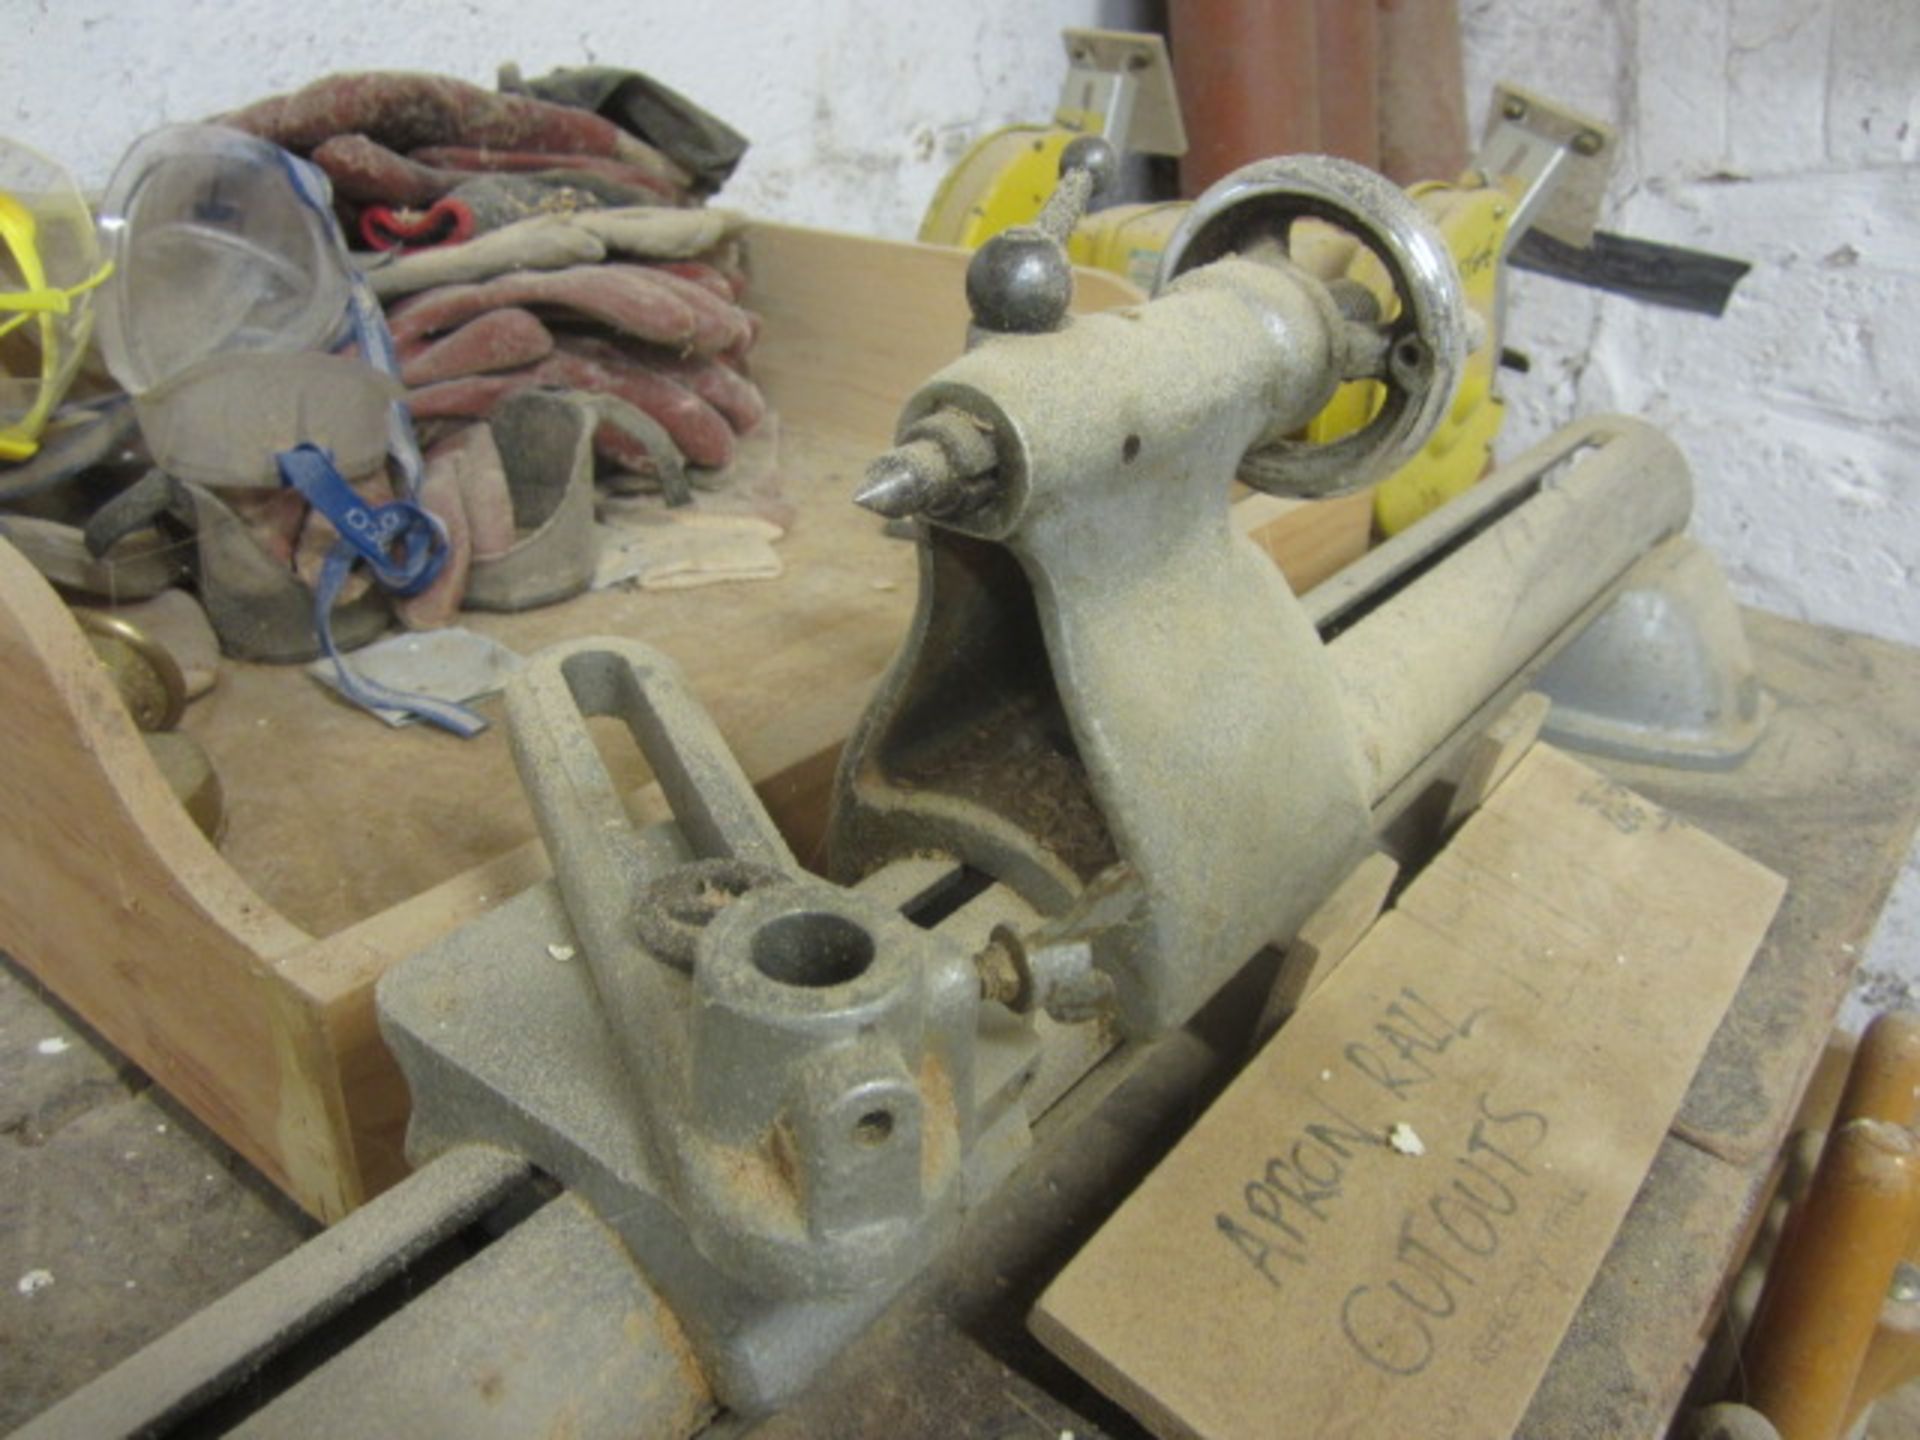 Myfold bench top wood turning lathe, Driv Loc electronic DC injection brake, various hand tools, - Image 3 of 6